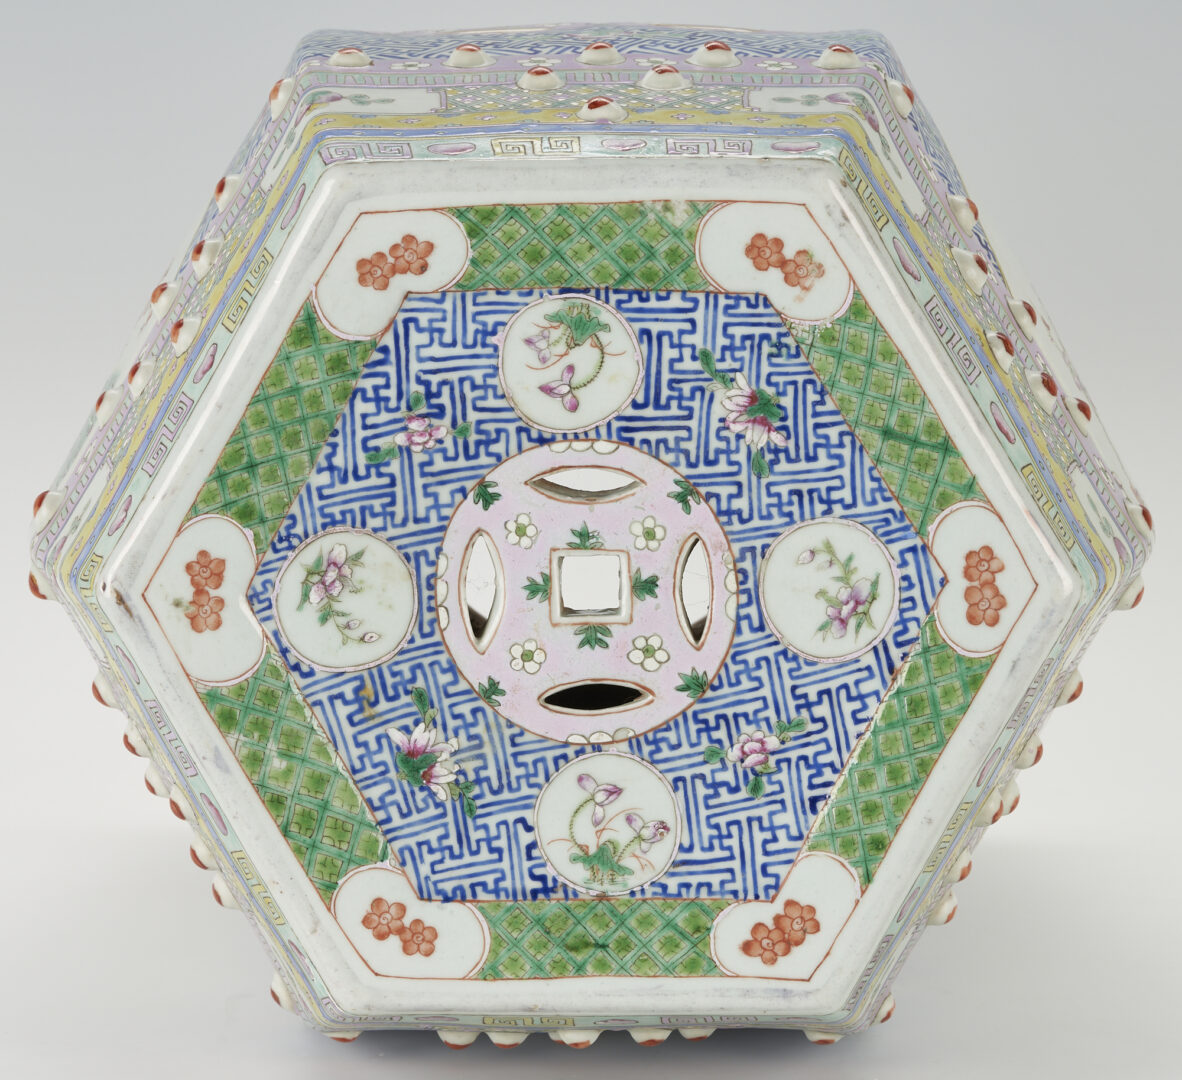 Lot 5: Chinese Famille Rose Porcelain Garden Seat